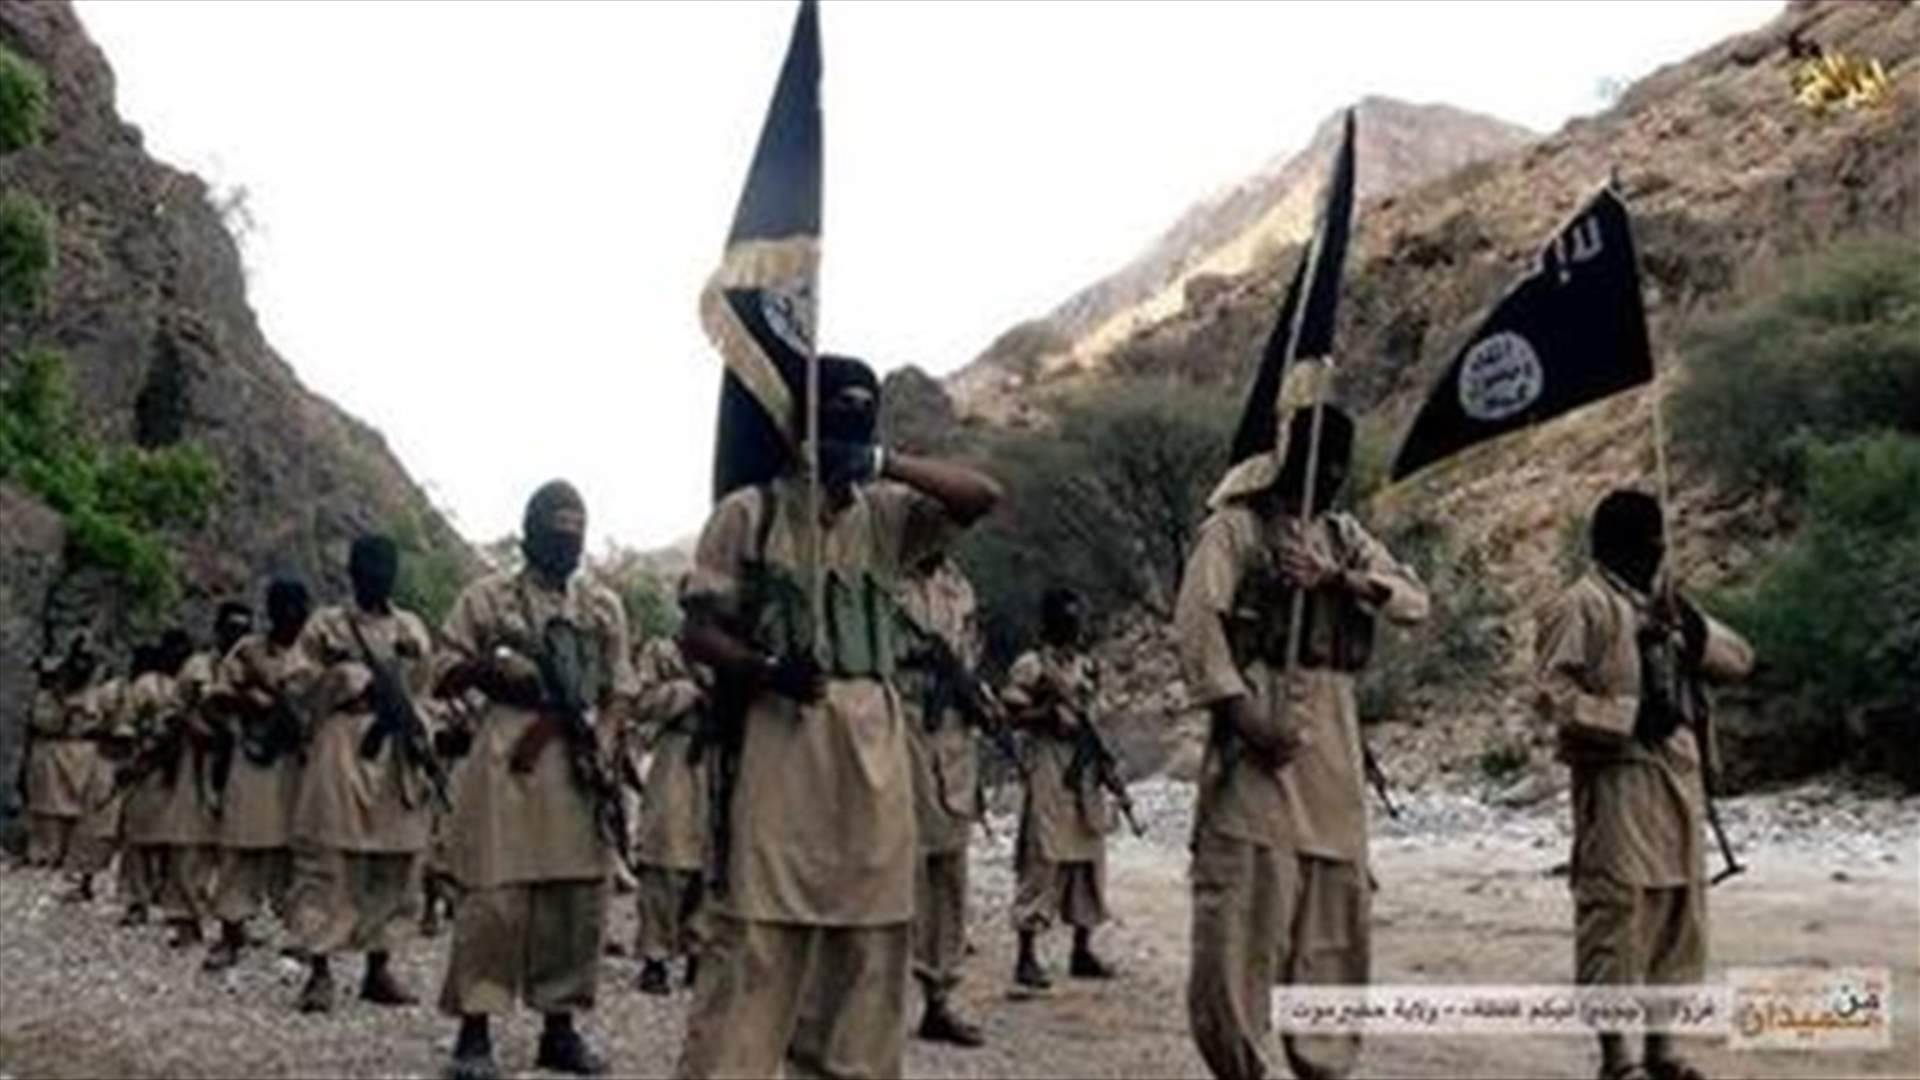 Four al Qaeda members killed in suspected U.S. drone strike – officials